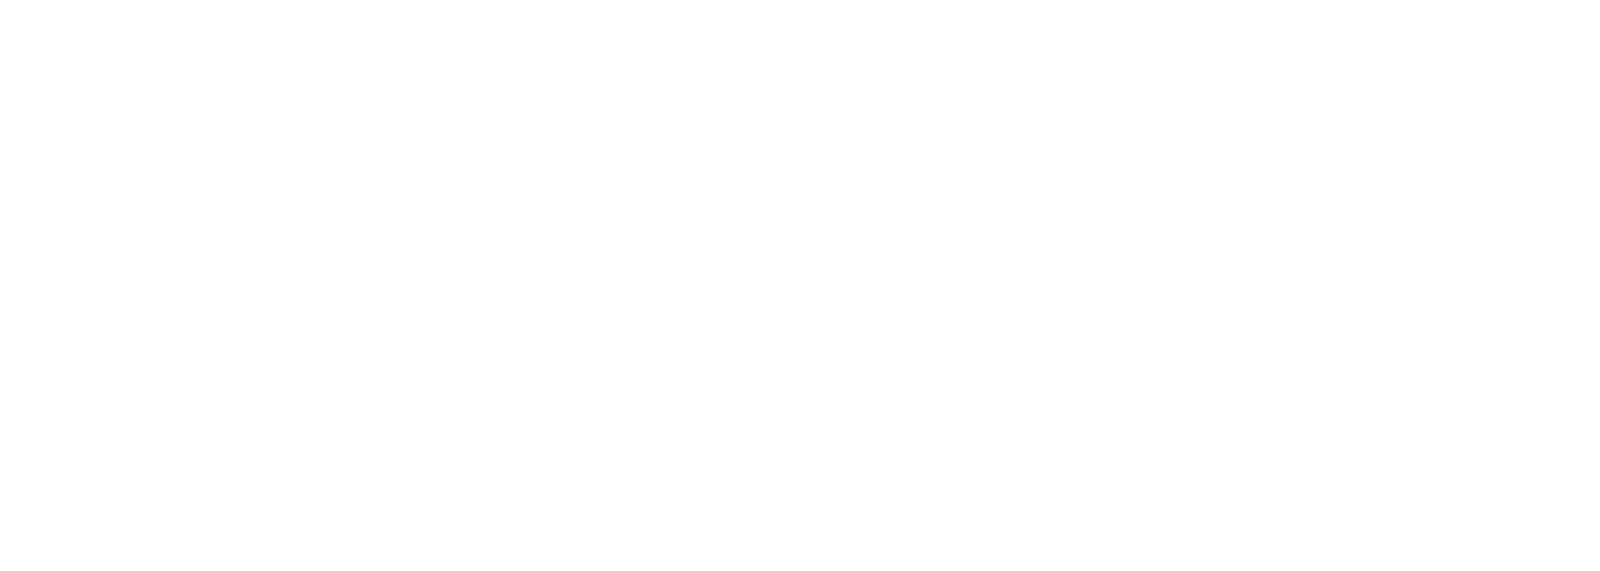 Castle Peak Veterinary Services